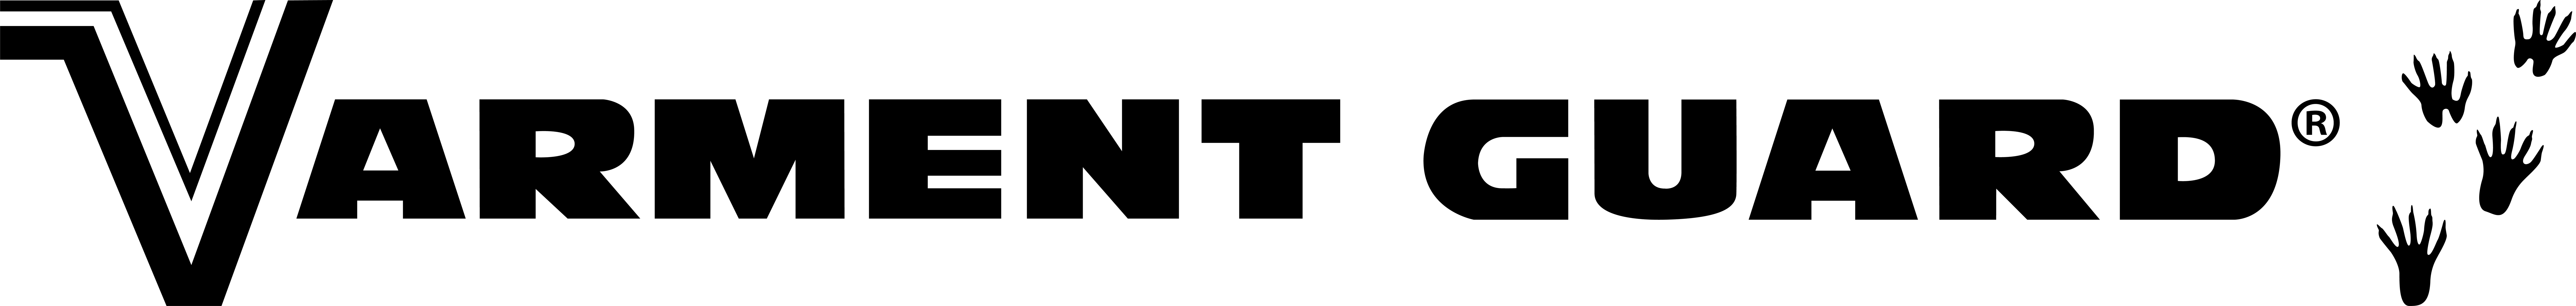 Varmet Guard Logo Horizontal